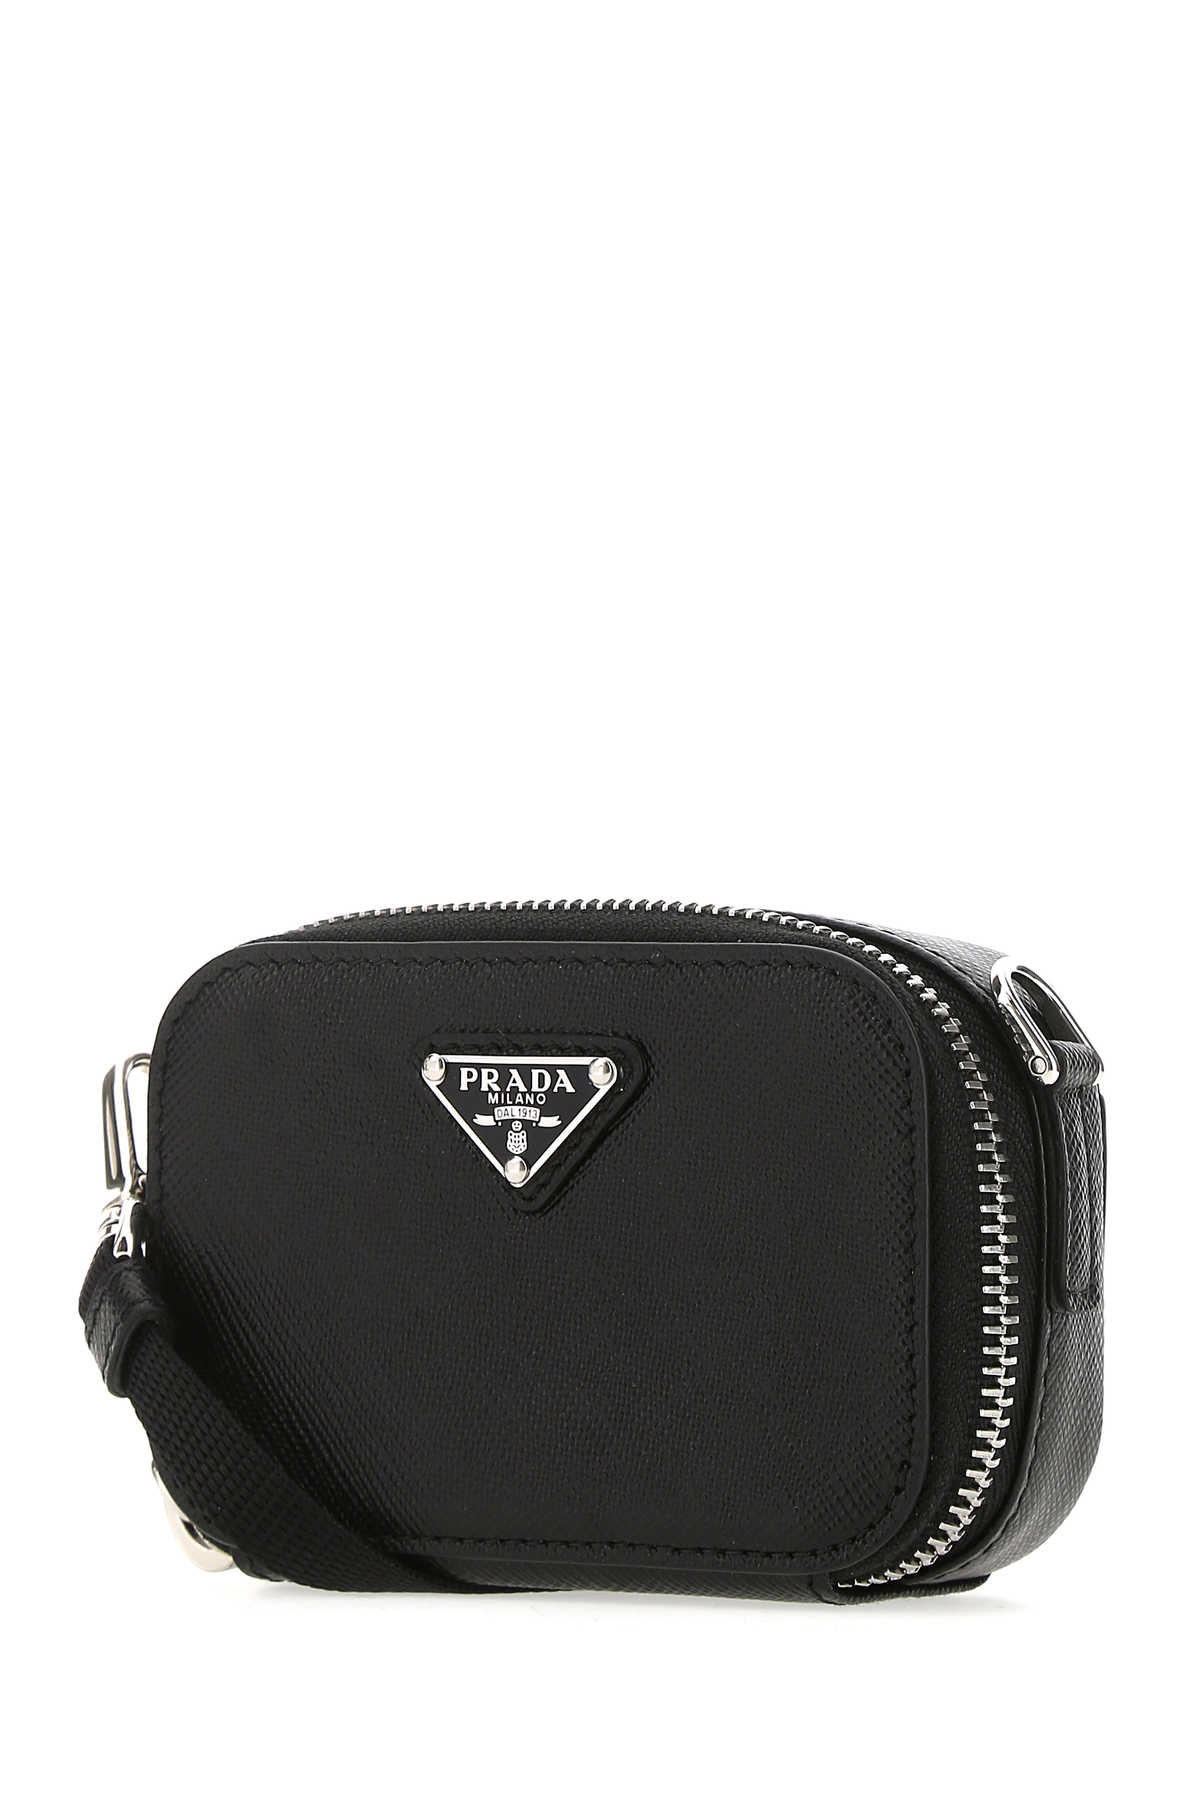 Prada Leather Crossbody Bag Strap Adjustable In F0002